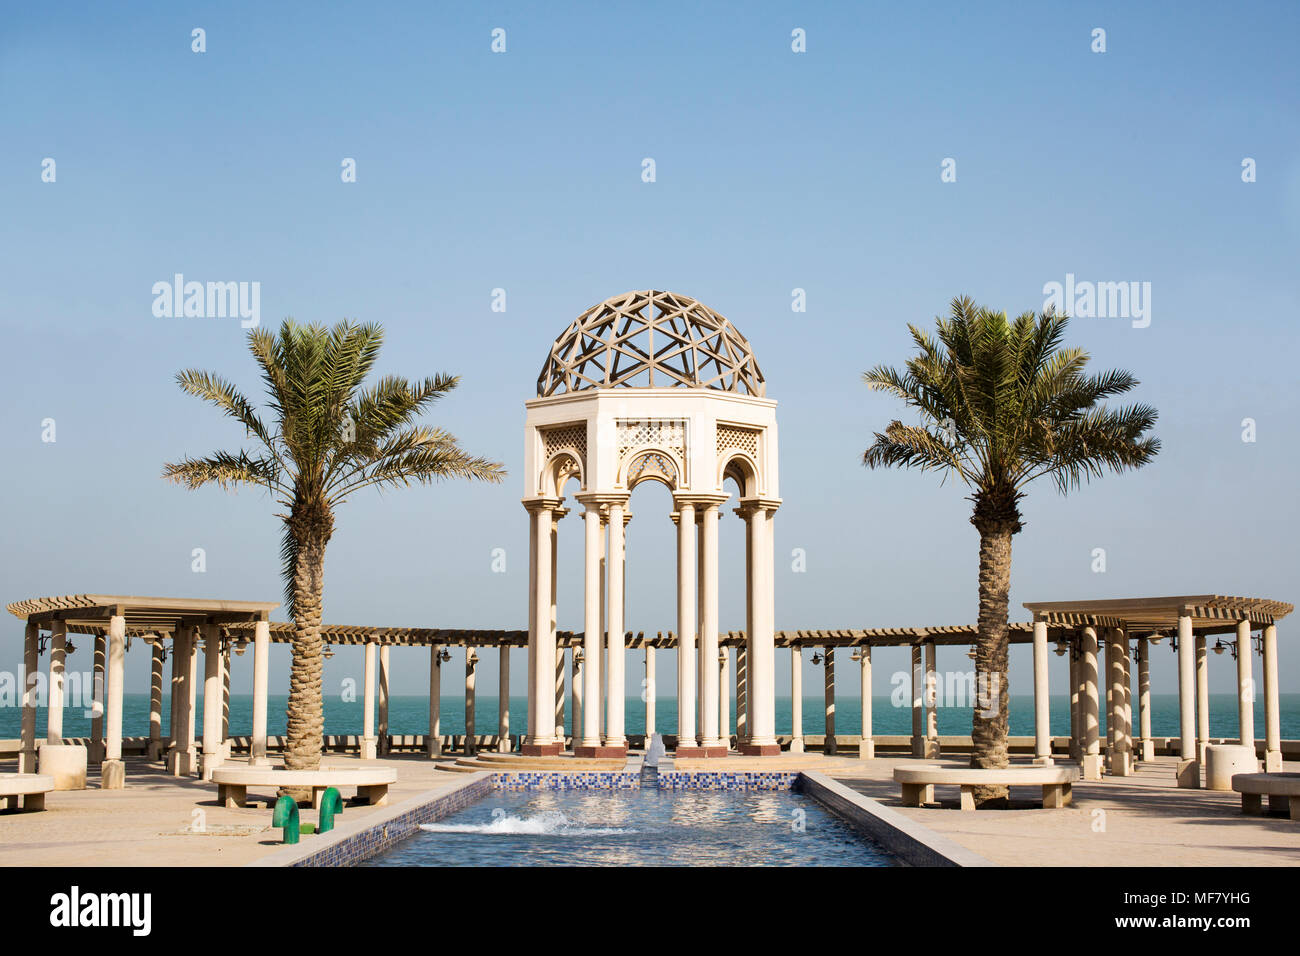 Islamic dome architecture along the corniche in Kuwait Stock Photo